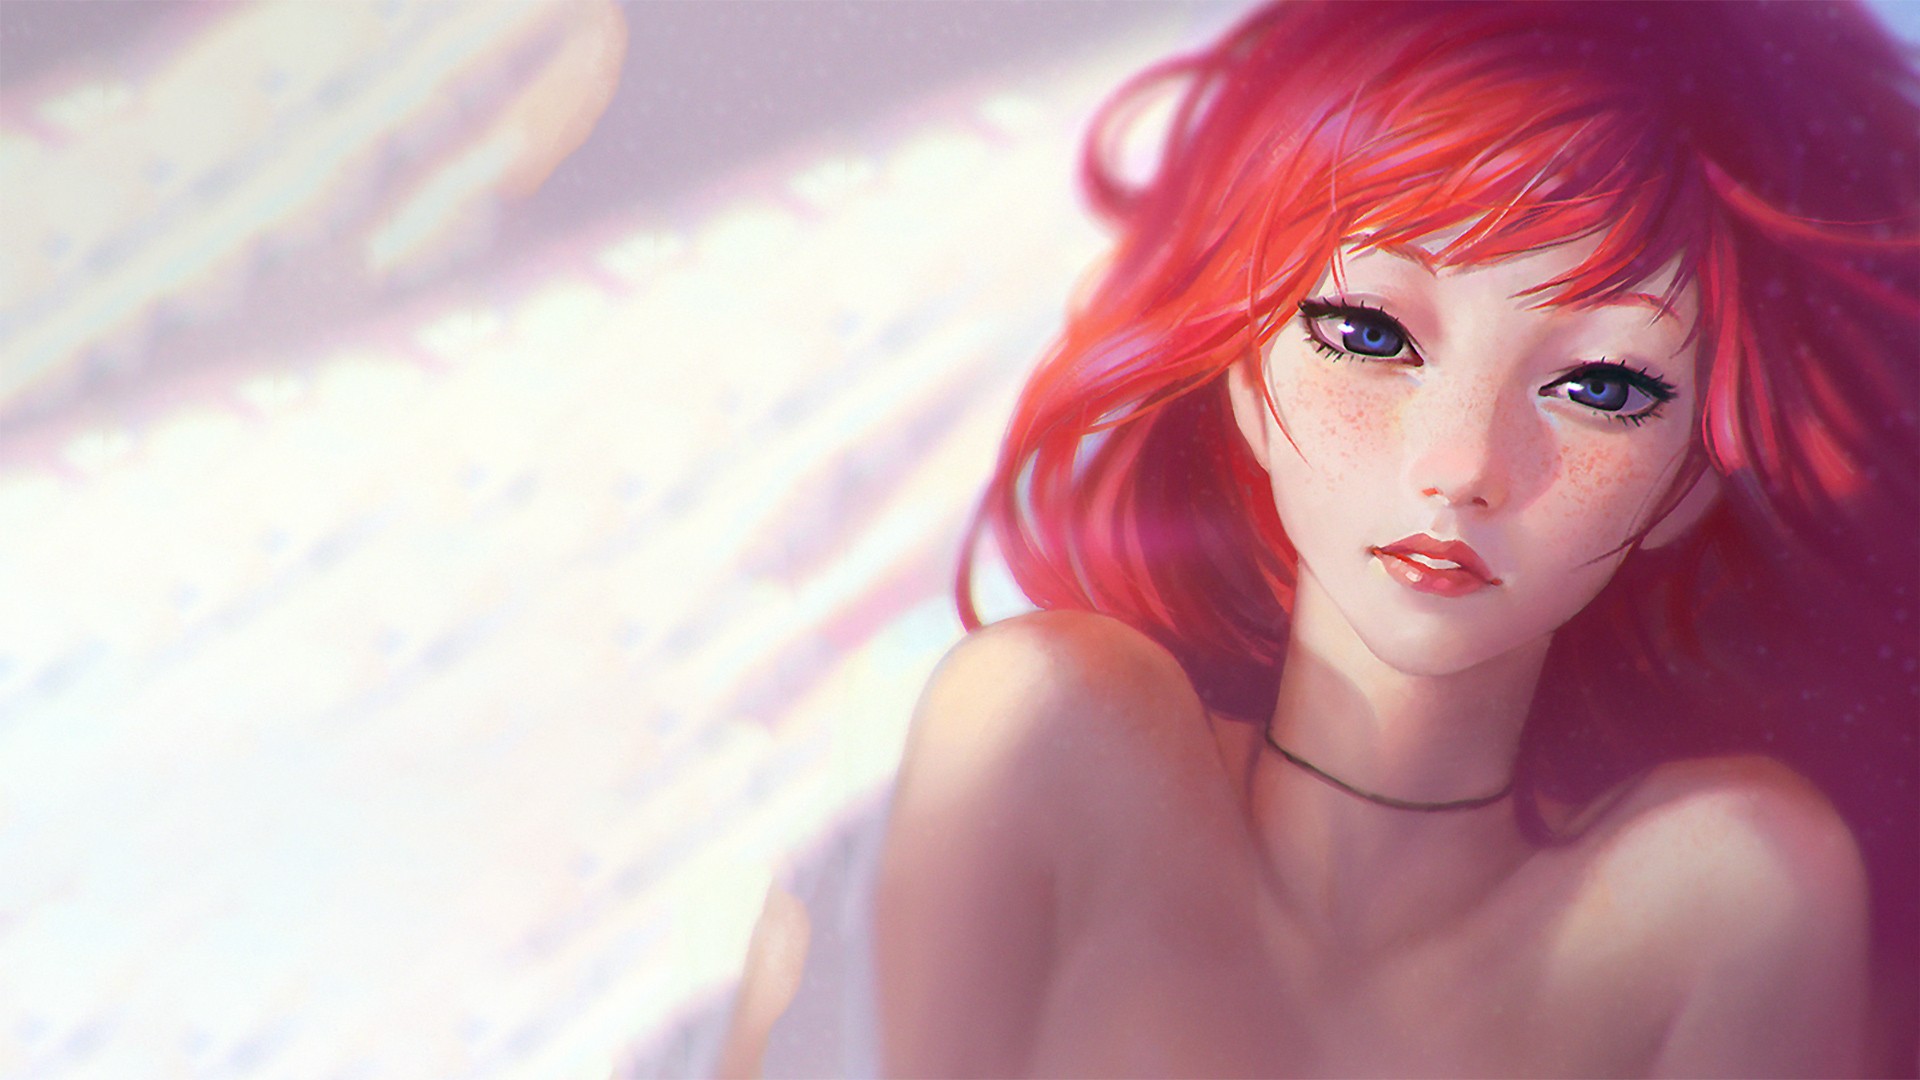 Redhead Blue Eyes Digital Art Anime Girls Wallpapers Hd Desktop And Mobile Backgrounds